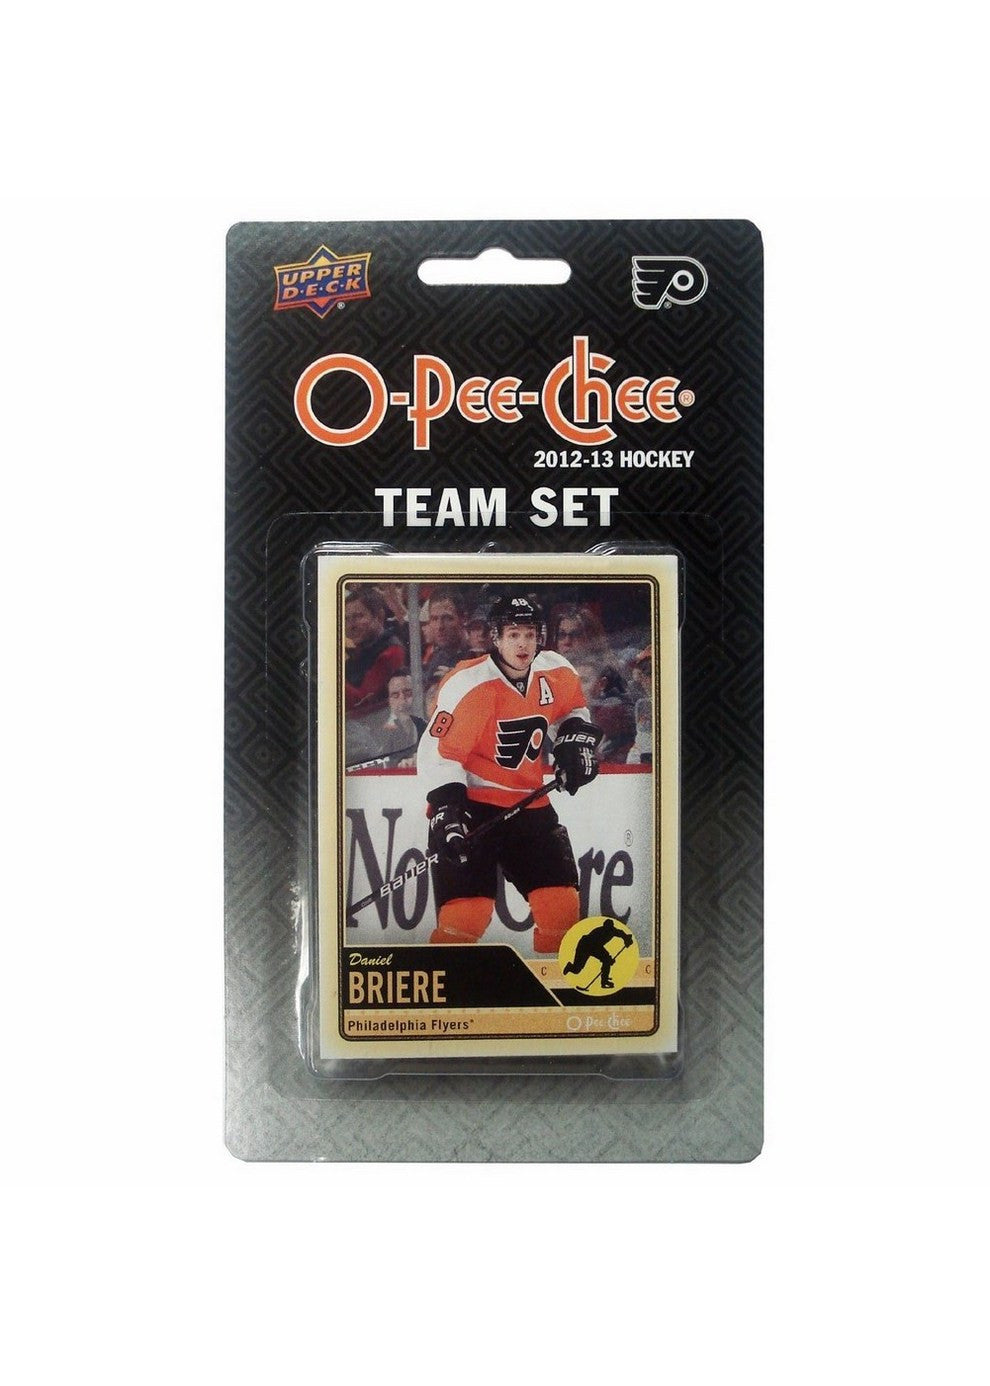 2012/13 Upper Deck O-pee-chee Team Card Set (17 Cards) - Philadelphia Flyers